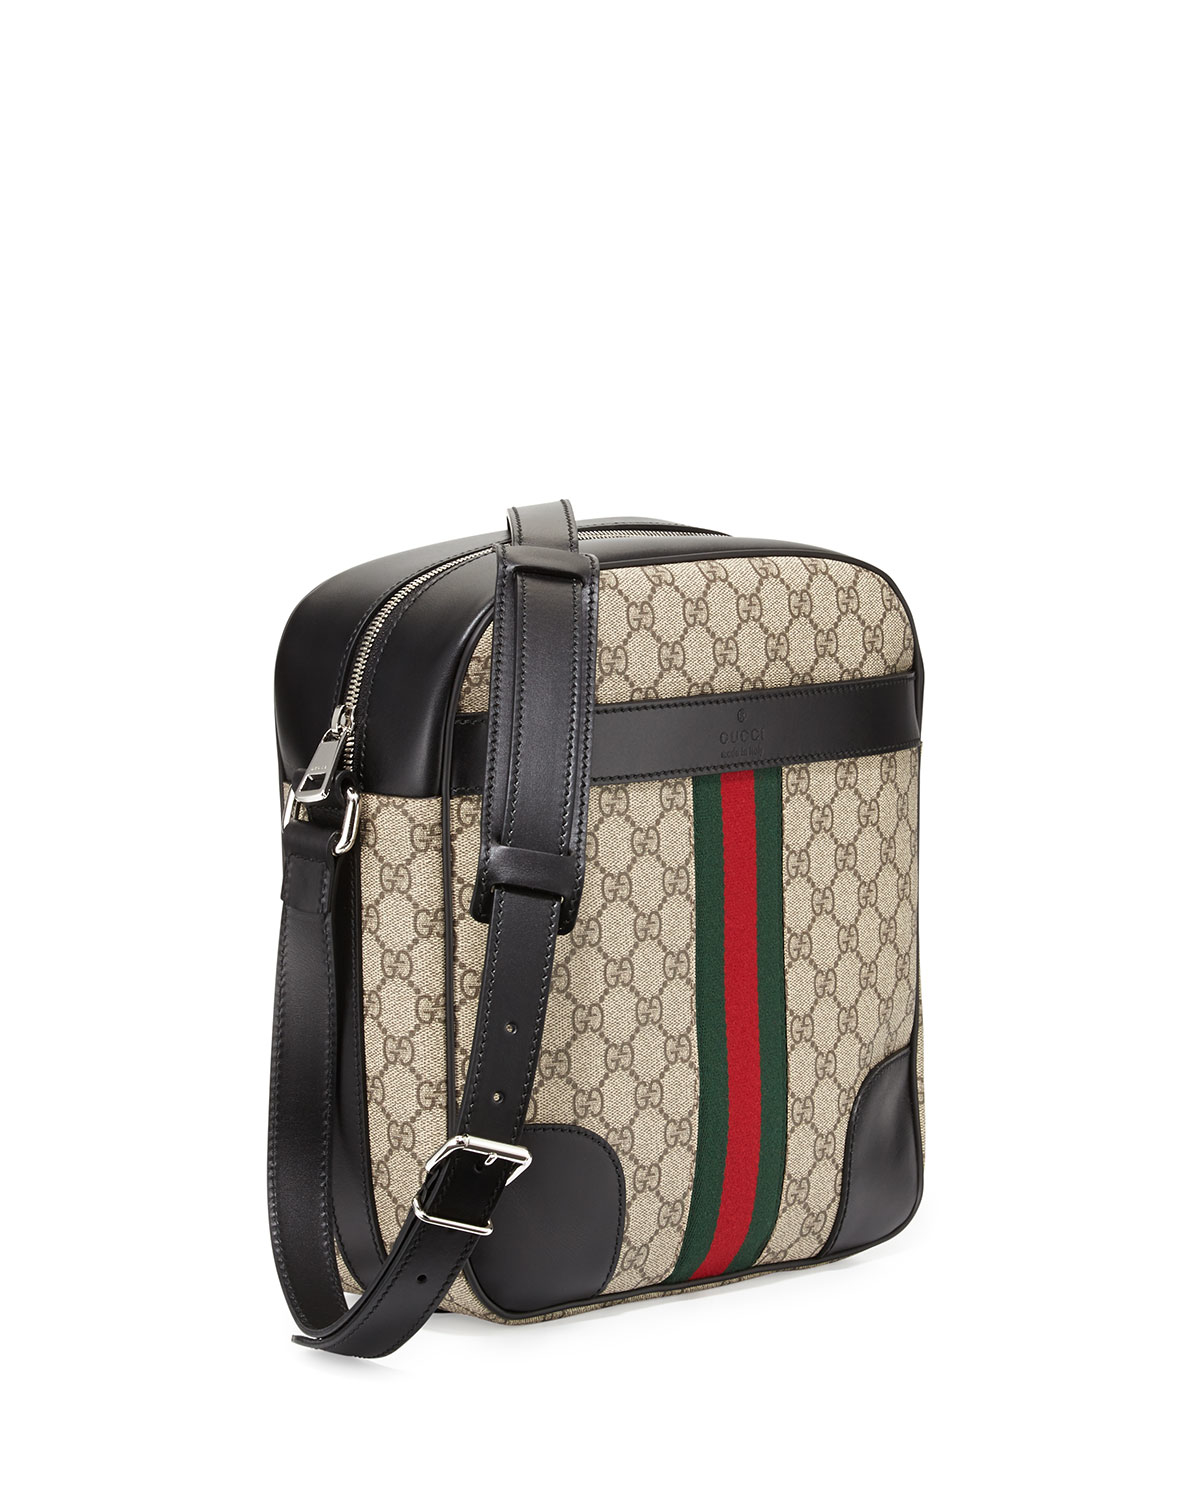 Lyst - Gucci Gg Canvas Messenger Flight Bag in Black for Men